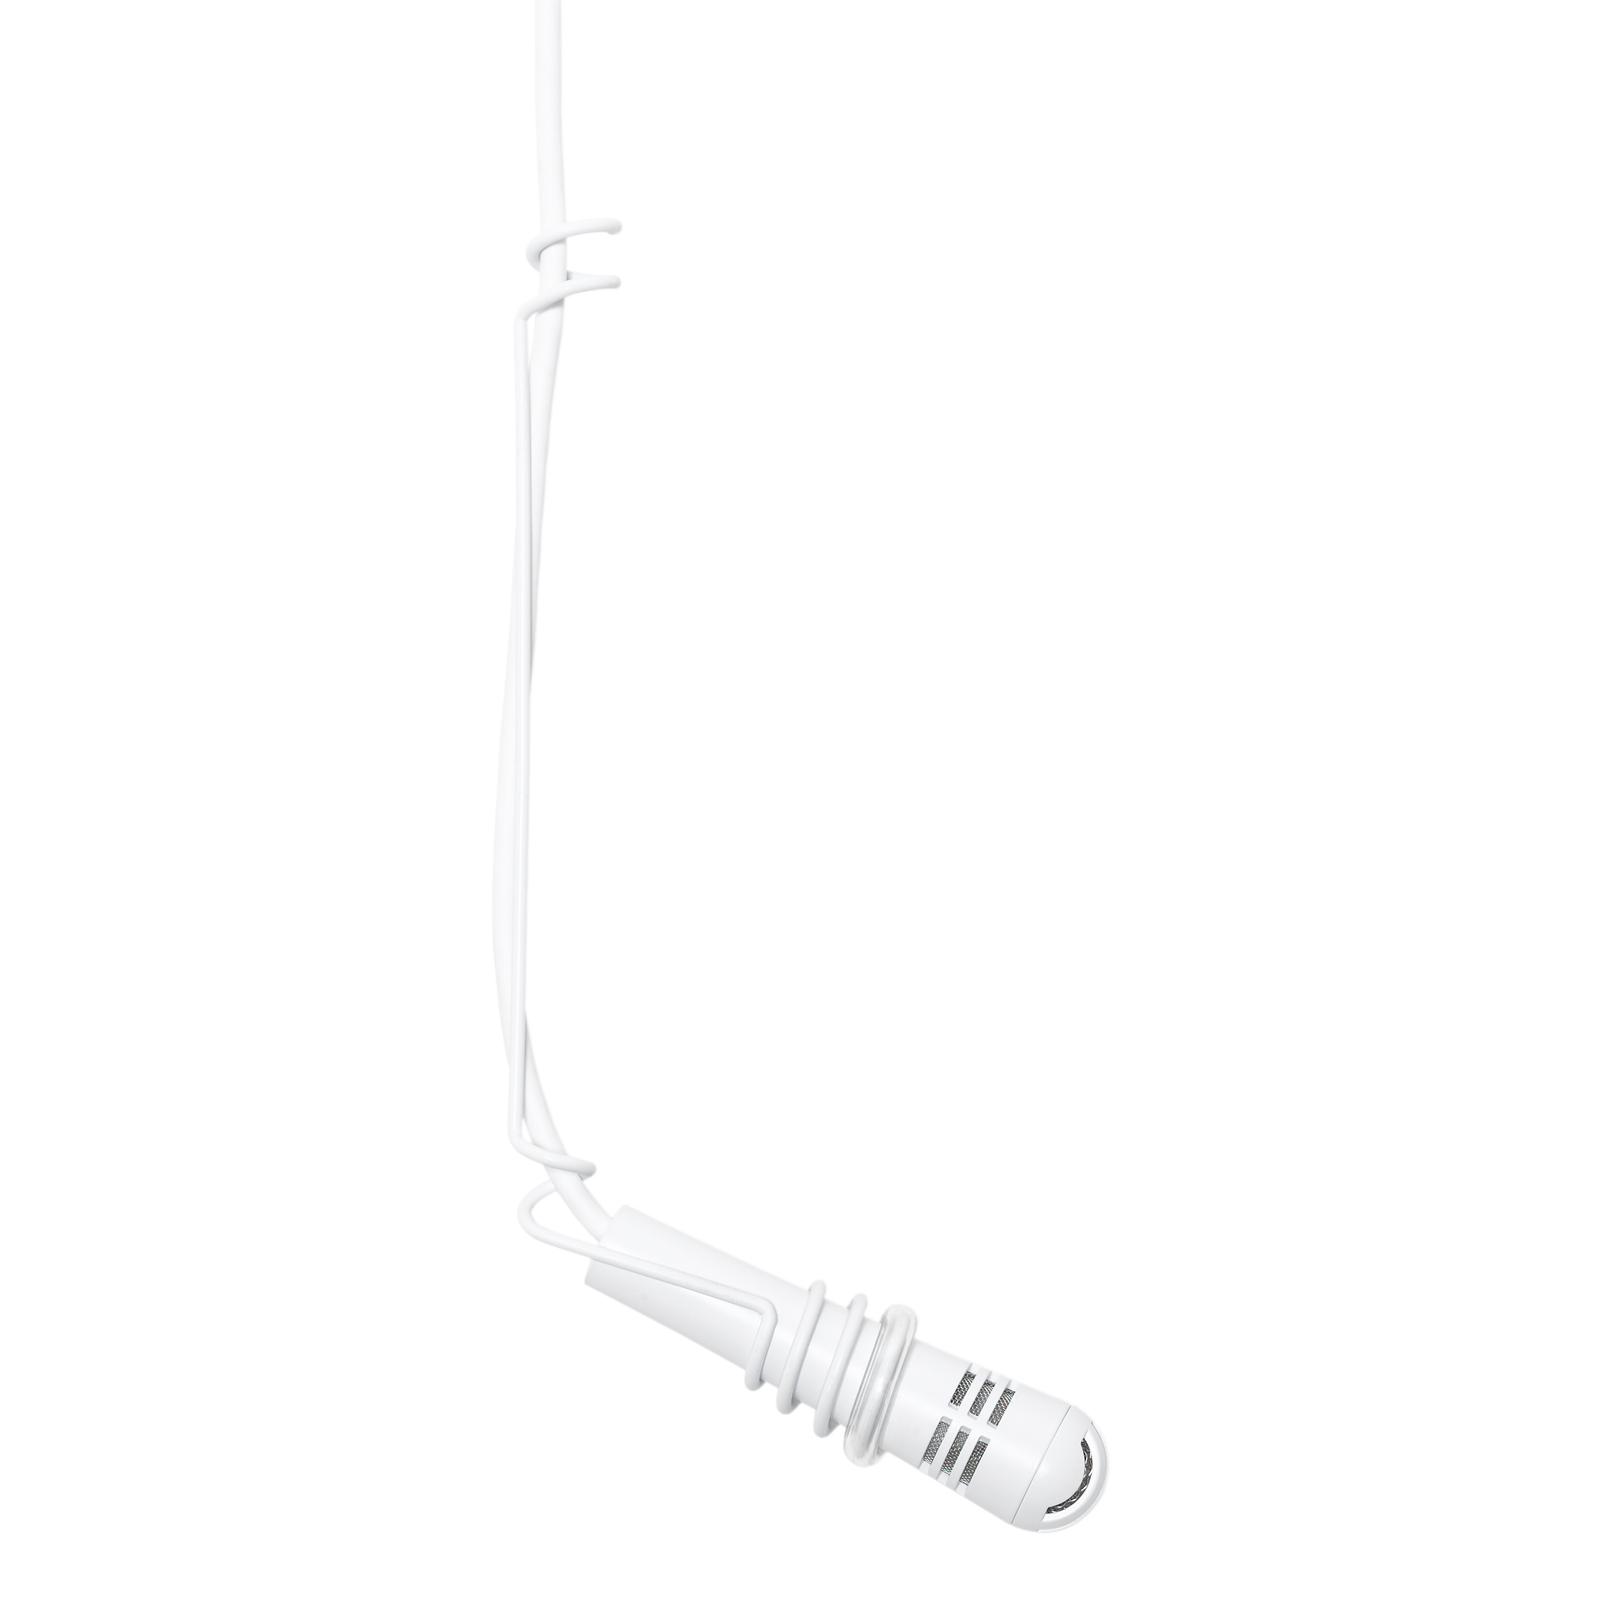 CHM99 (B-Stock) - Black - Hanging cardioid condenser microphone - Hero